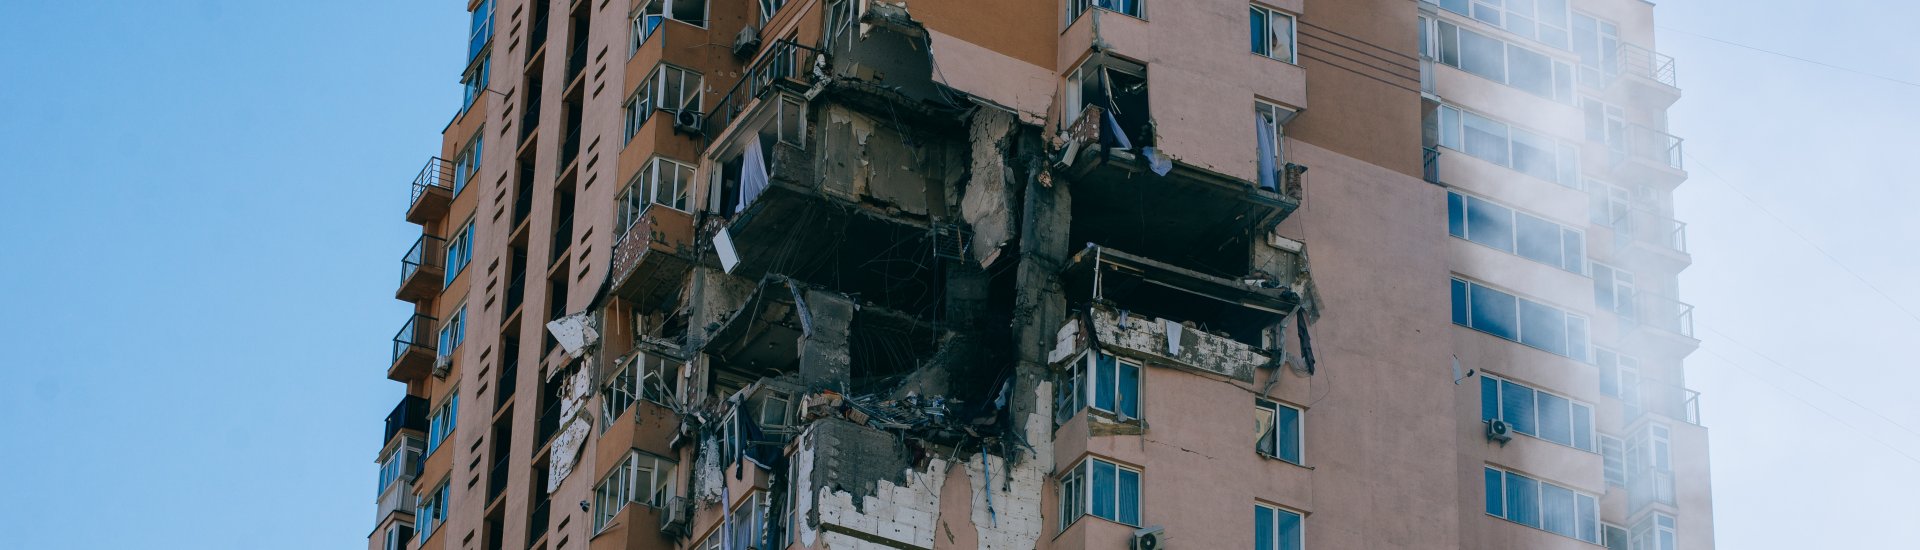 Een ernstig beschadigd flatgebouw in Kyiv na een raketinslag.